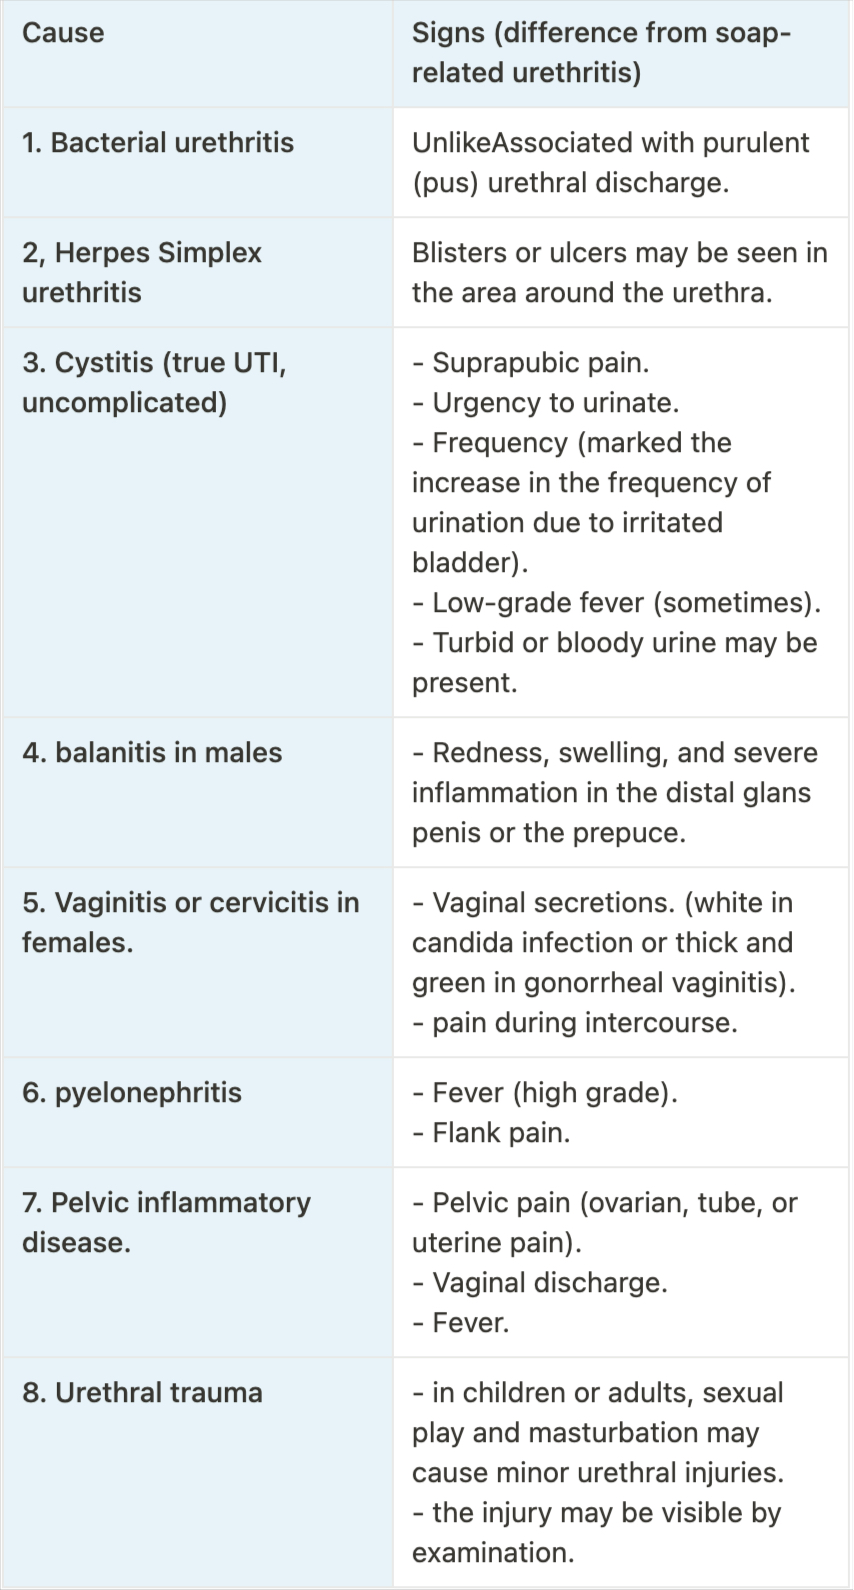 Soap urethritis V.S. other causes of chemical urethritis